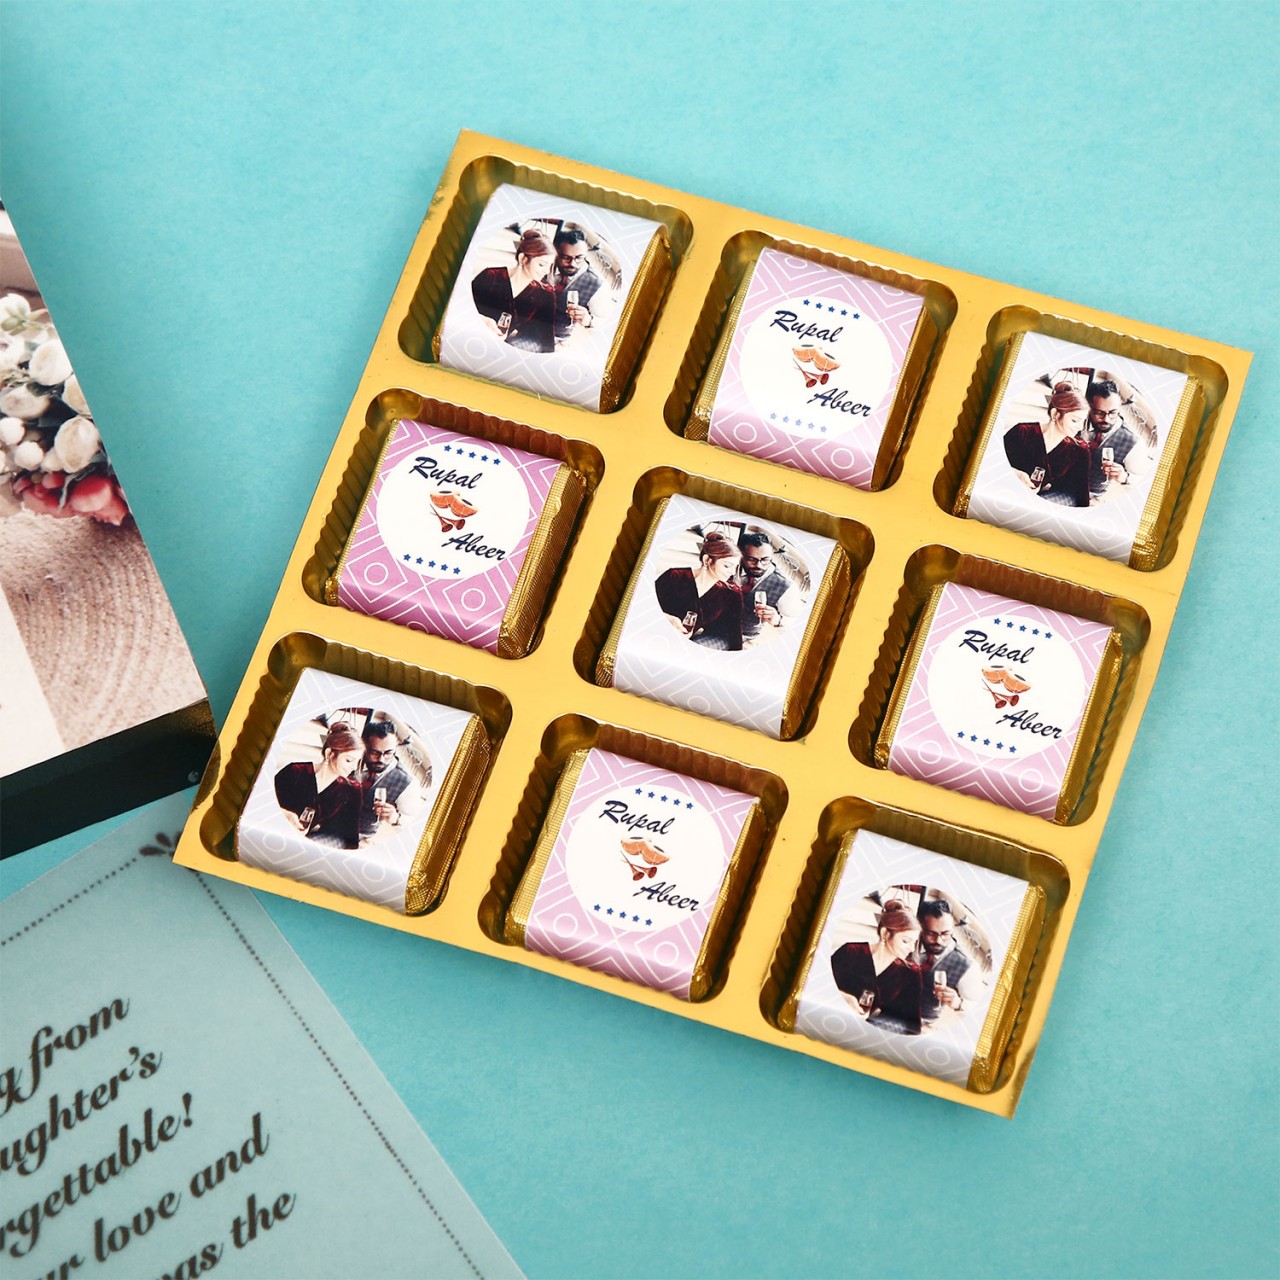 Personalized Invitation Chocolate Box with Couple Photo